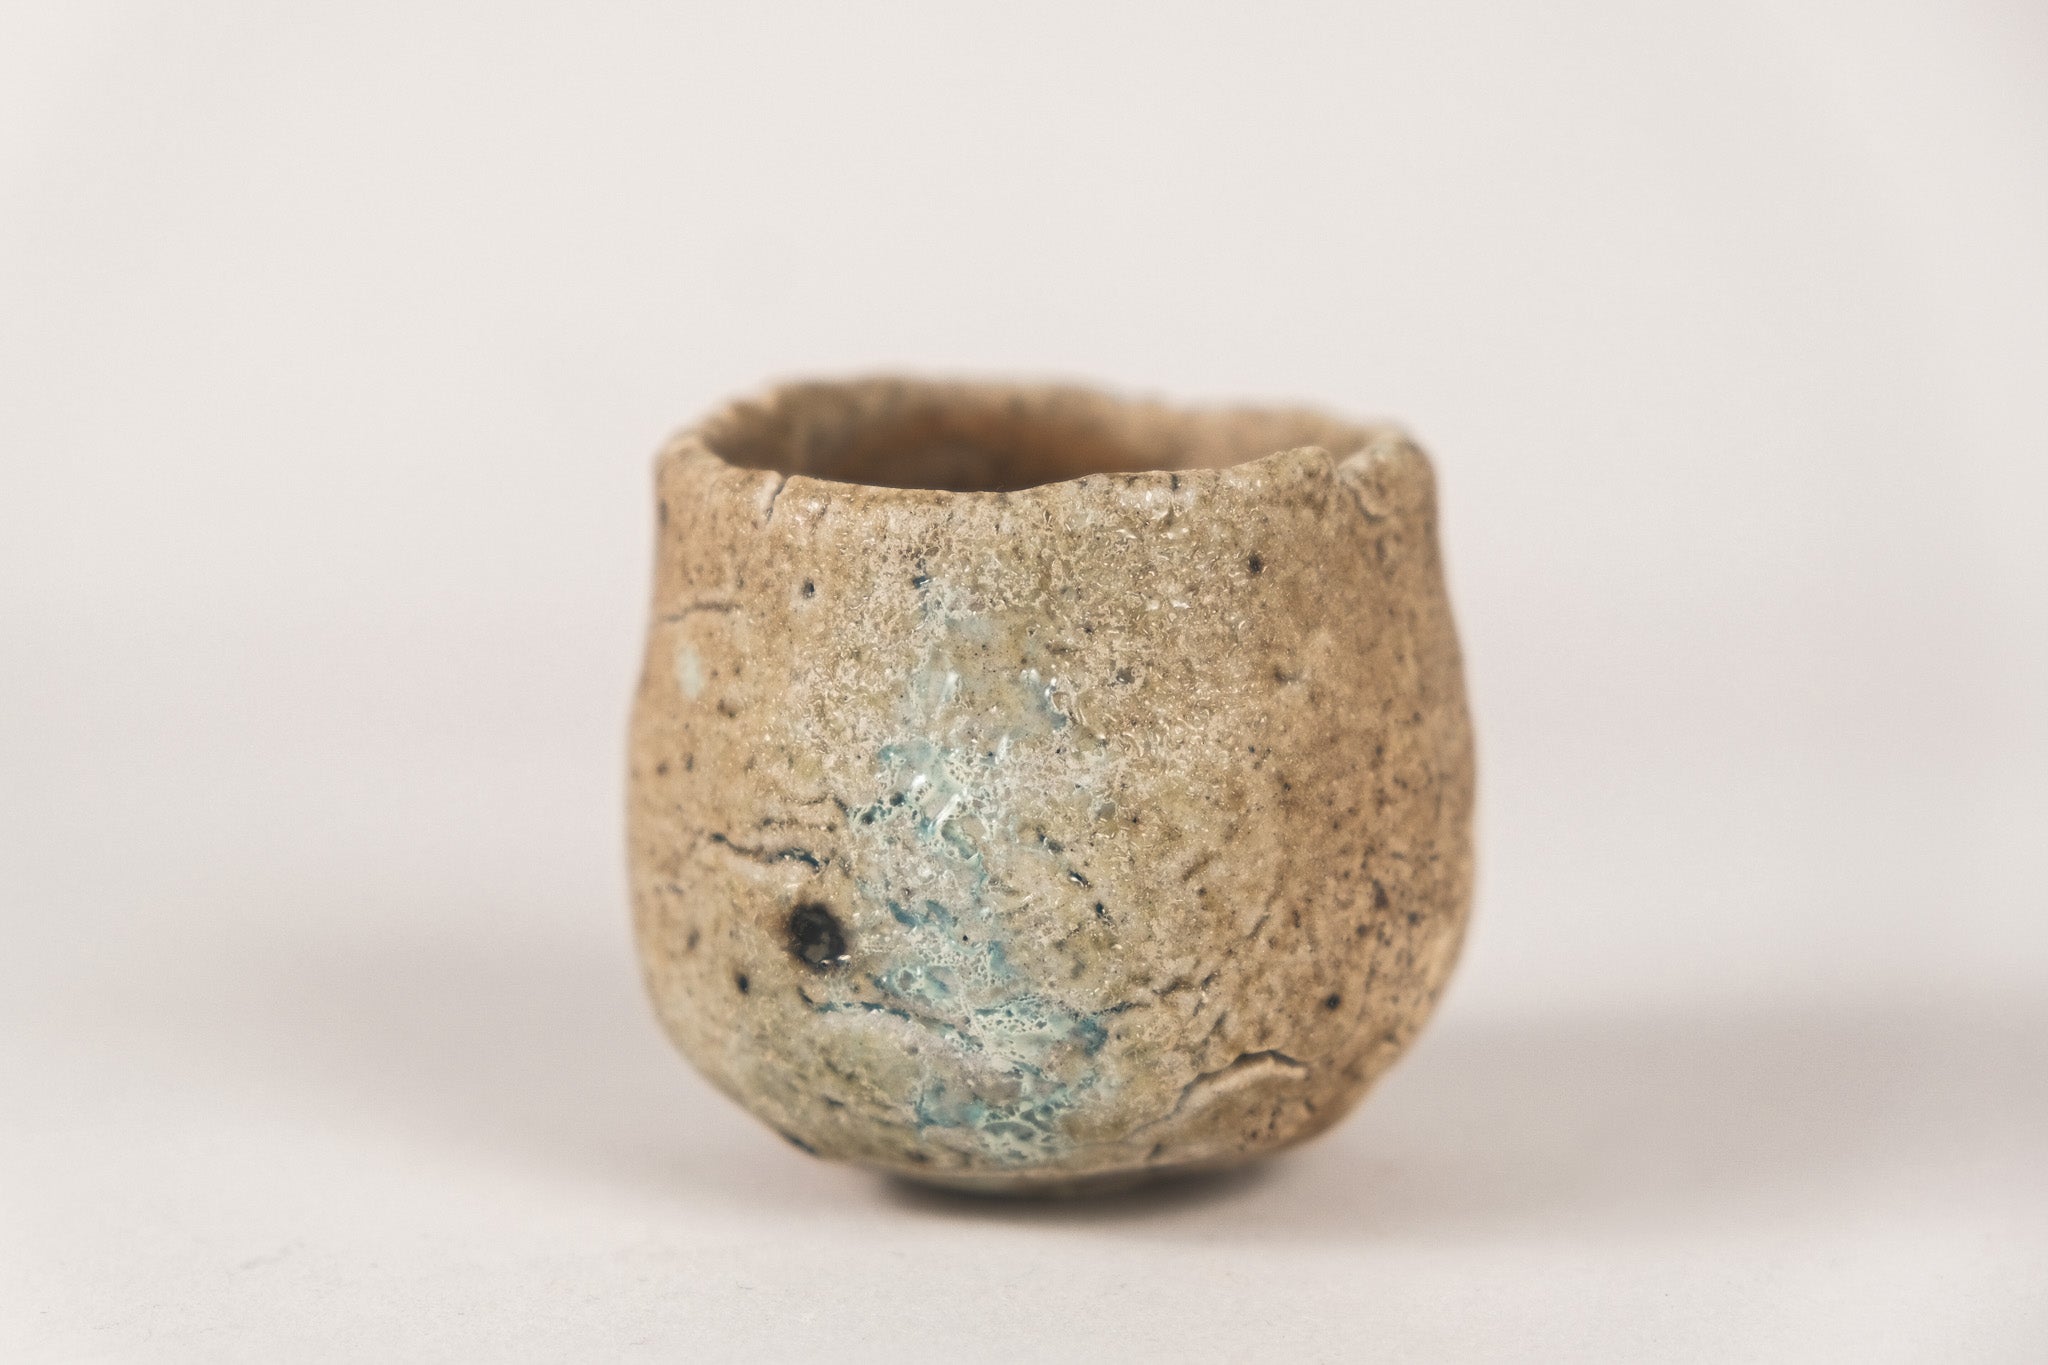 Teacup - Unglazed Wood-fired · Teacup with Sky Blue Crackle Grass and Wood Ash Glaze